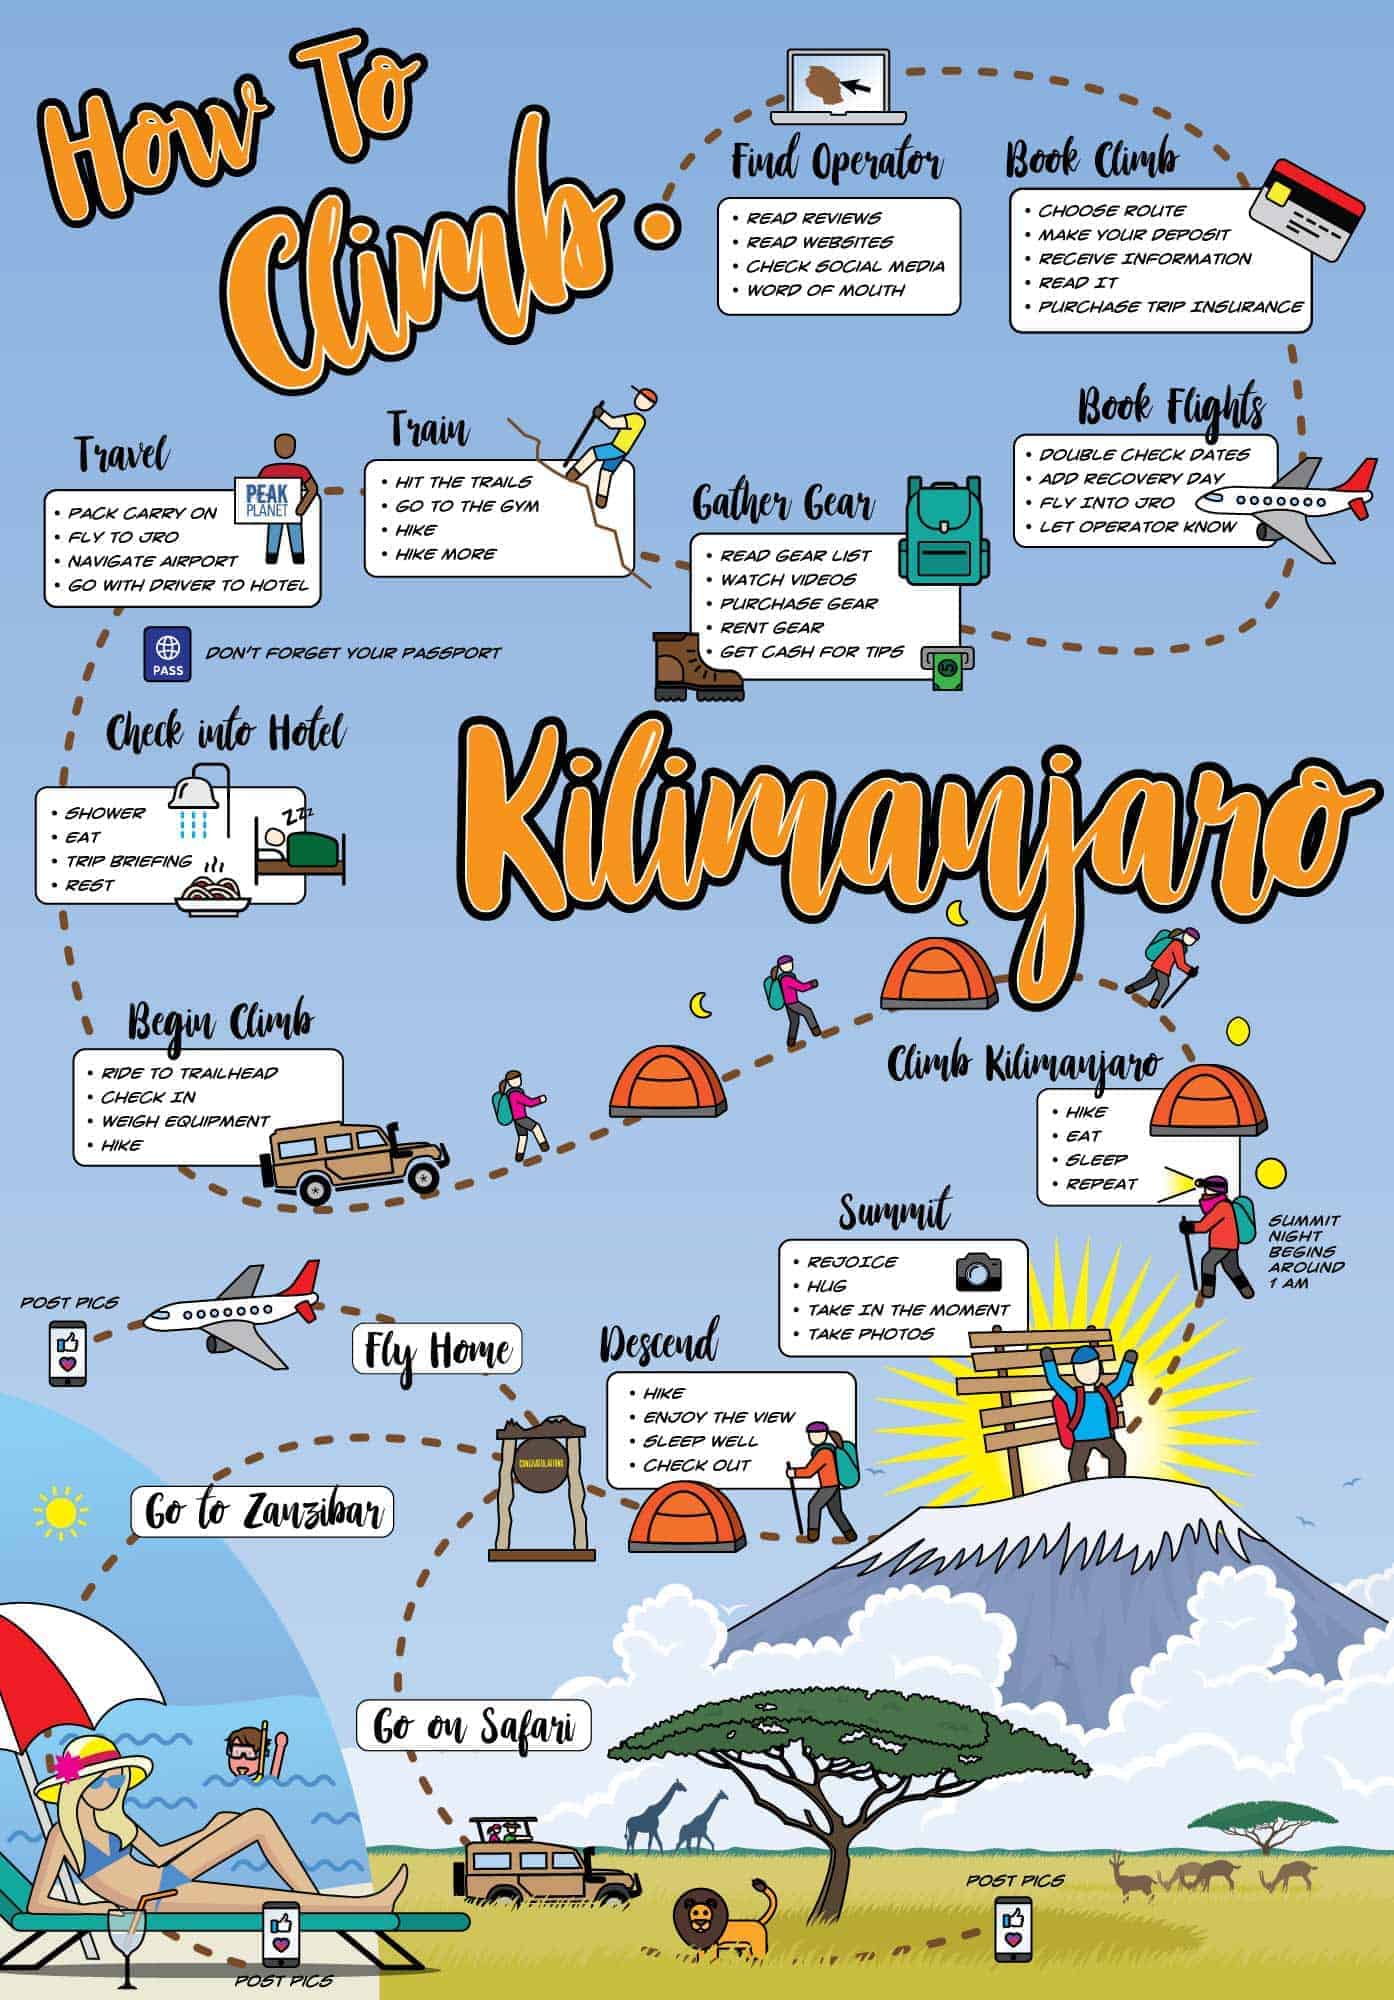 how to climb Kilimanjaro infographic